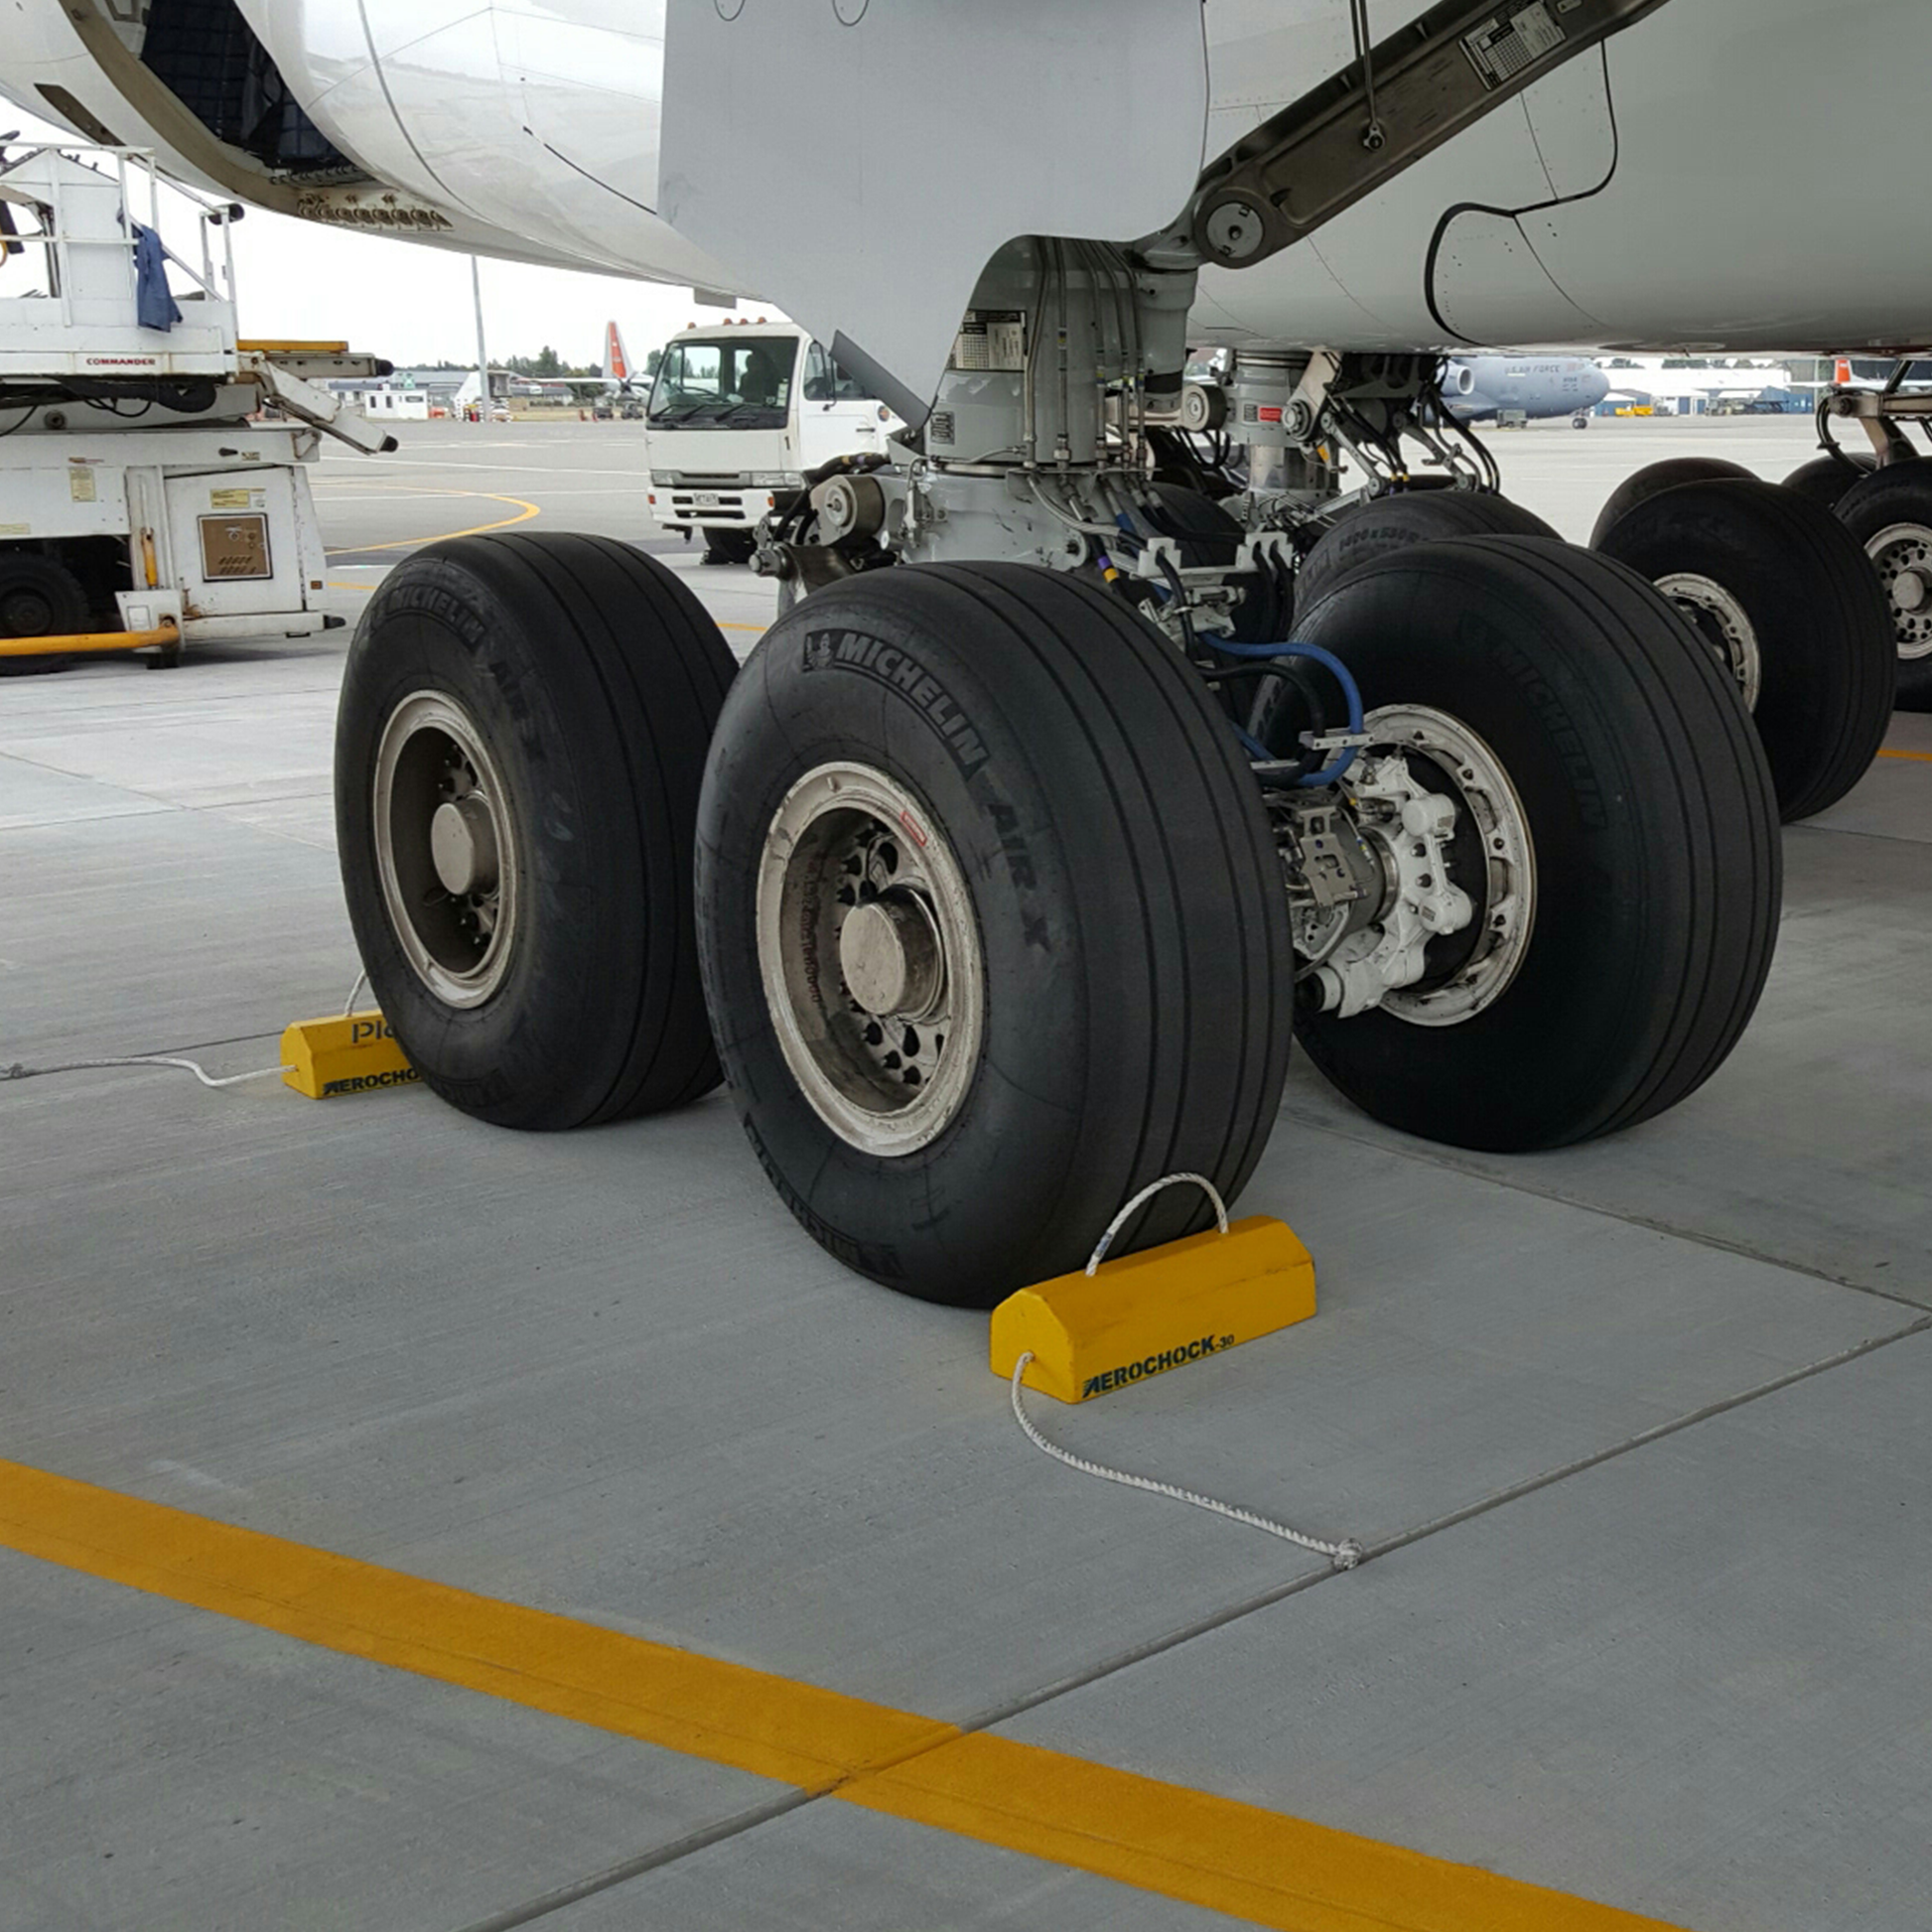 NPR08312-00 (Aerochock30 B) in use on plane wheels